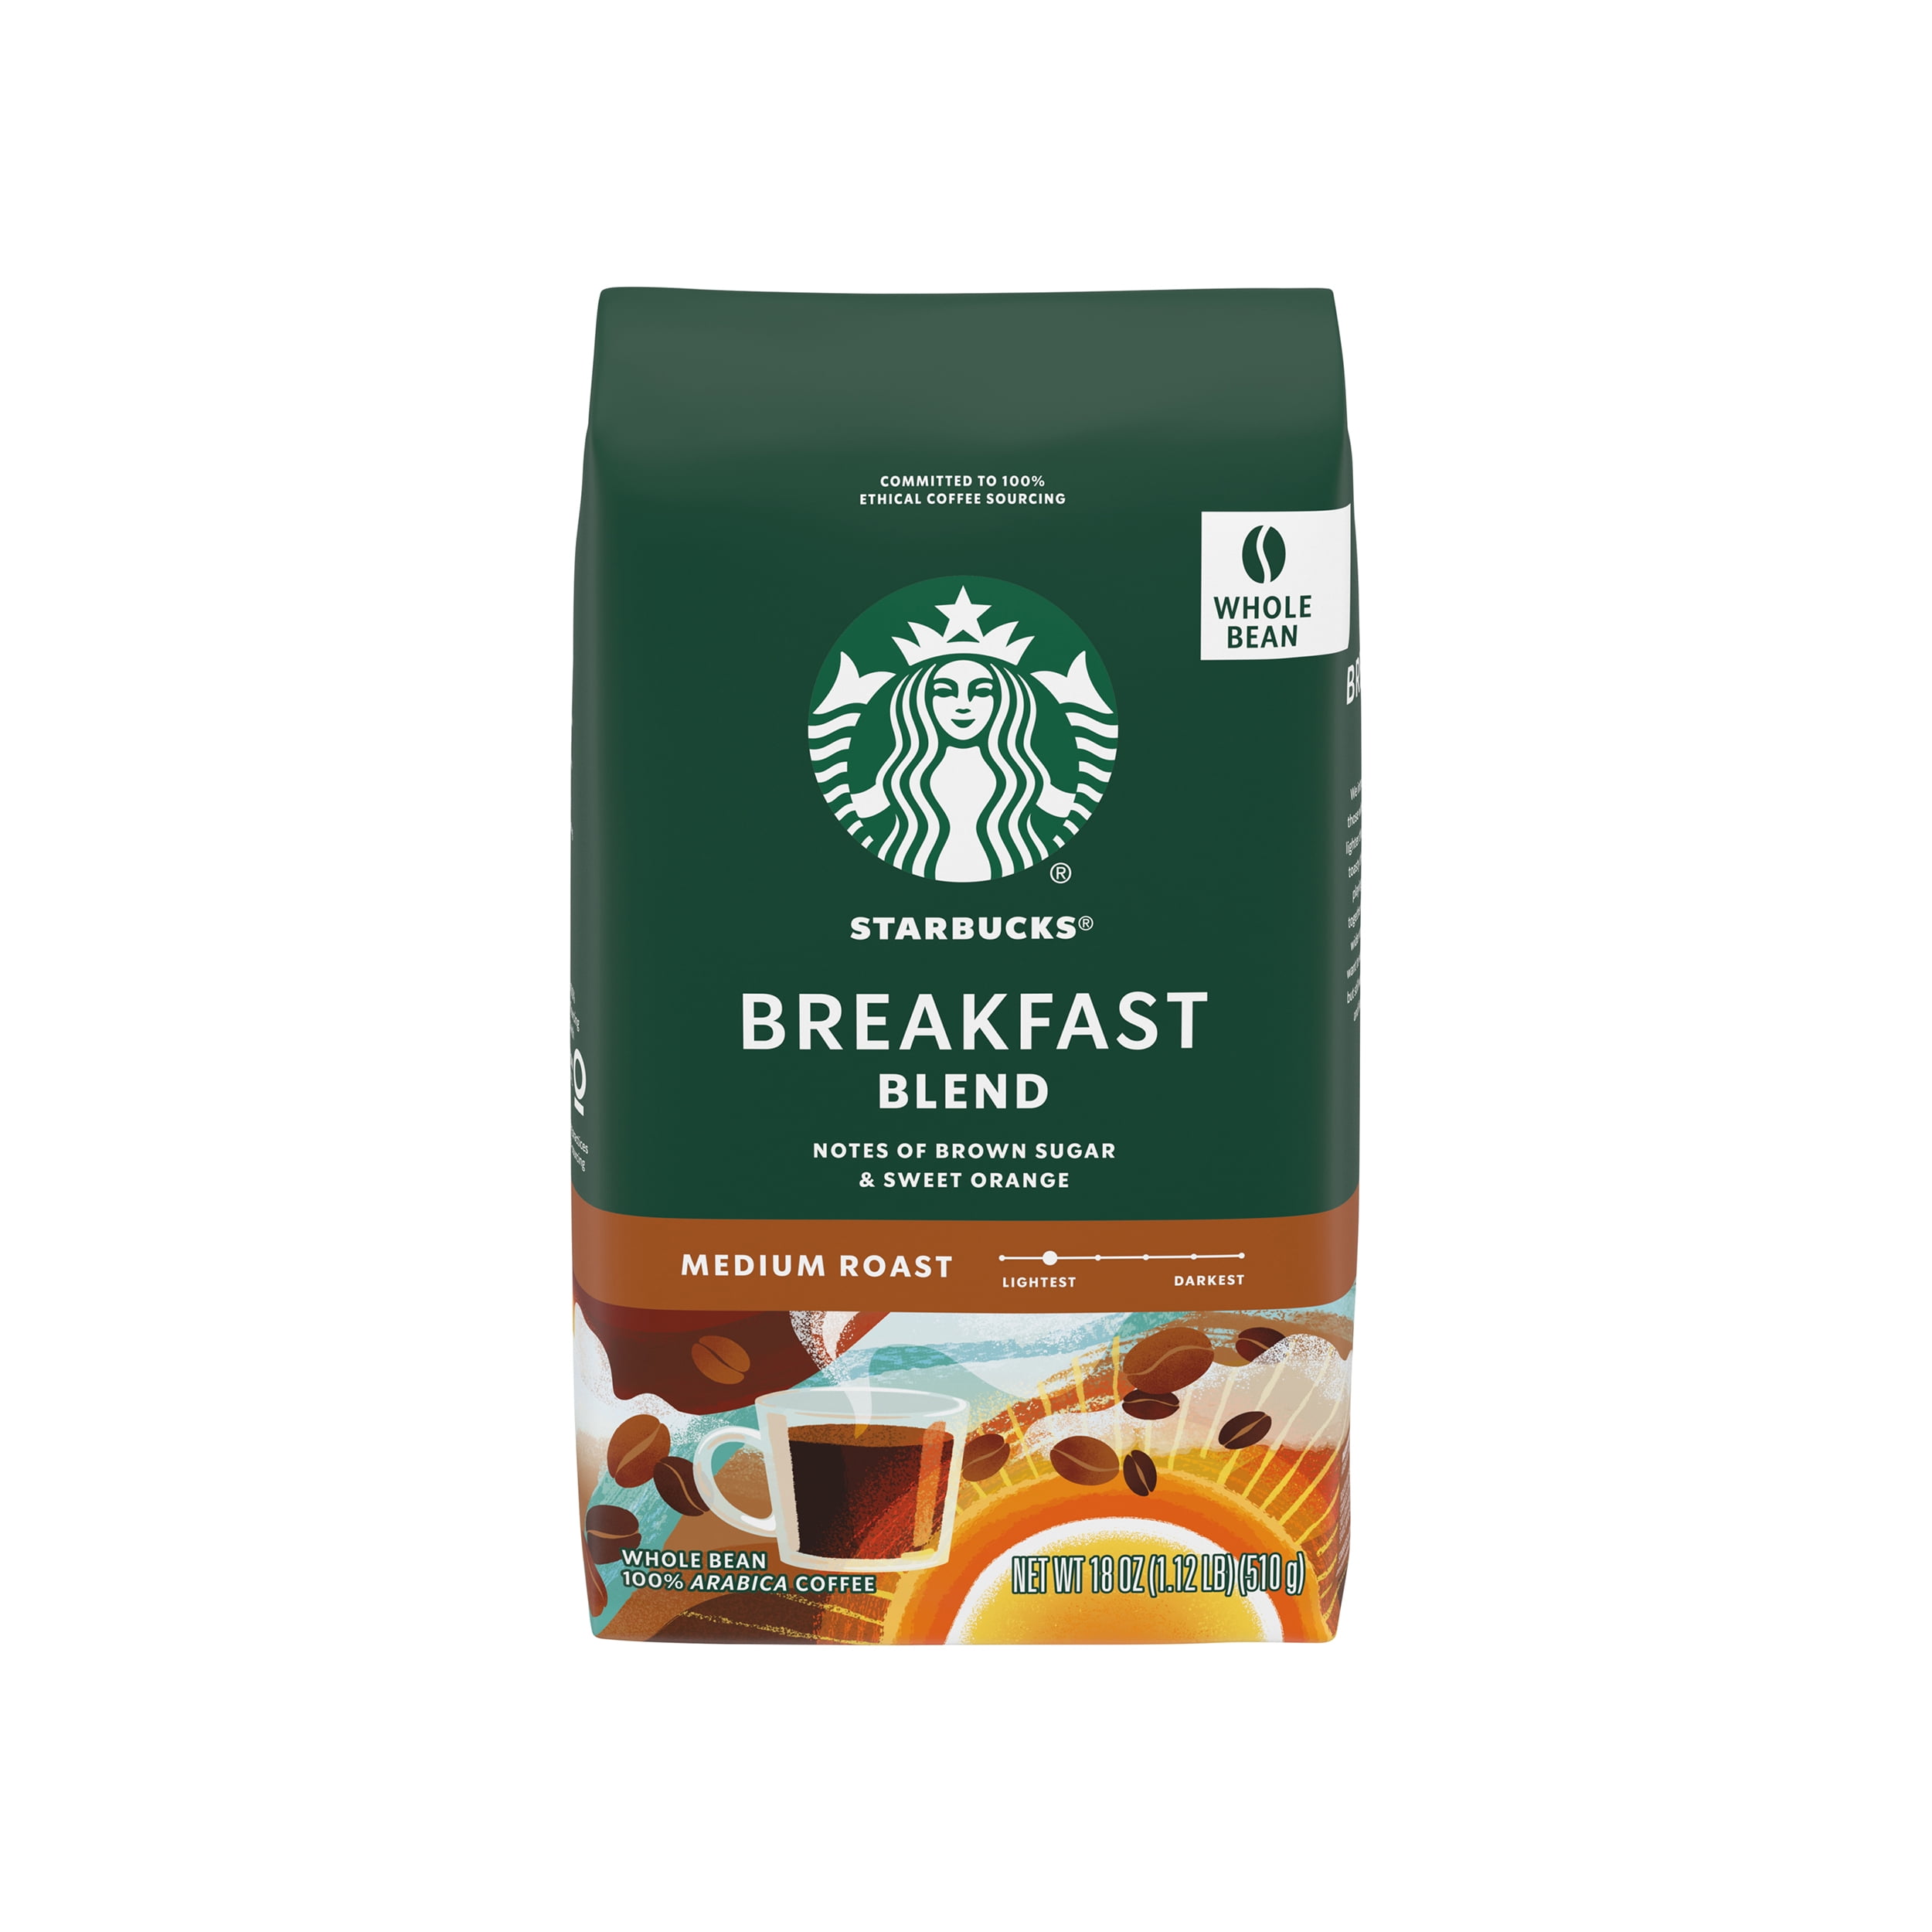 Starbucks Breakfast Blend, Whole Bean Coffee, Medium Roast, 18 oz